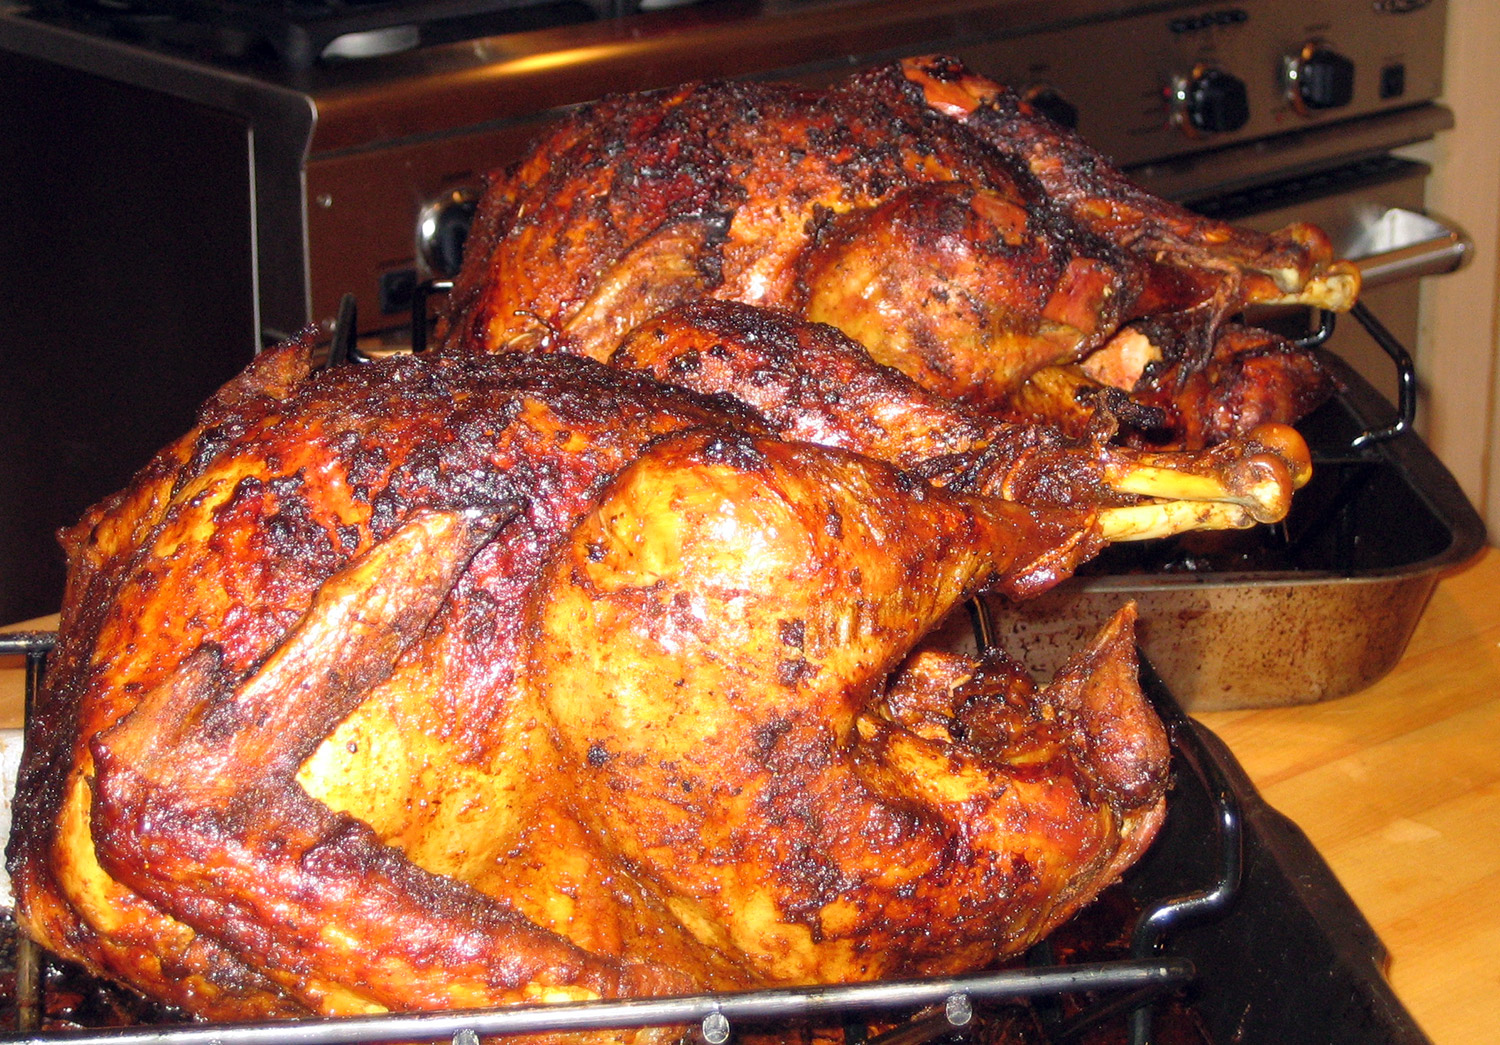 https://www.laurengroveman.com/wp-content/uploads/2009/01/Roast-Turkeys-on-a-Random-Monday-Night-1.jpg